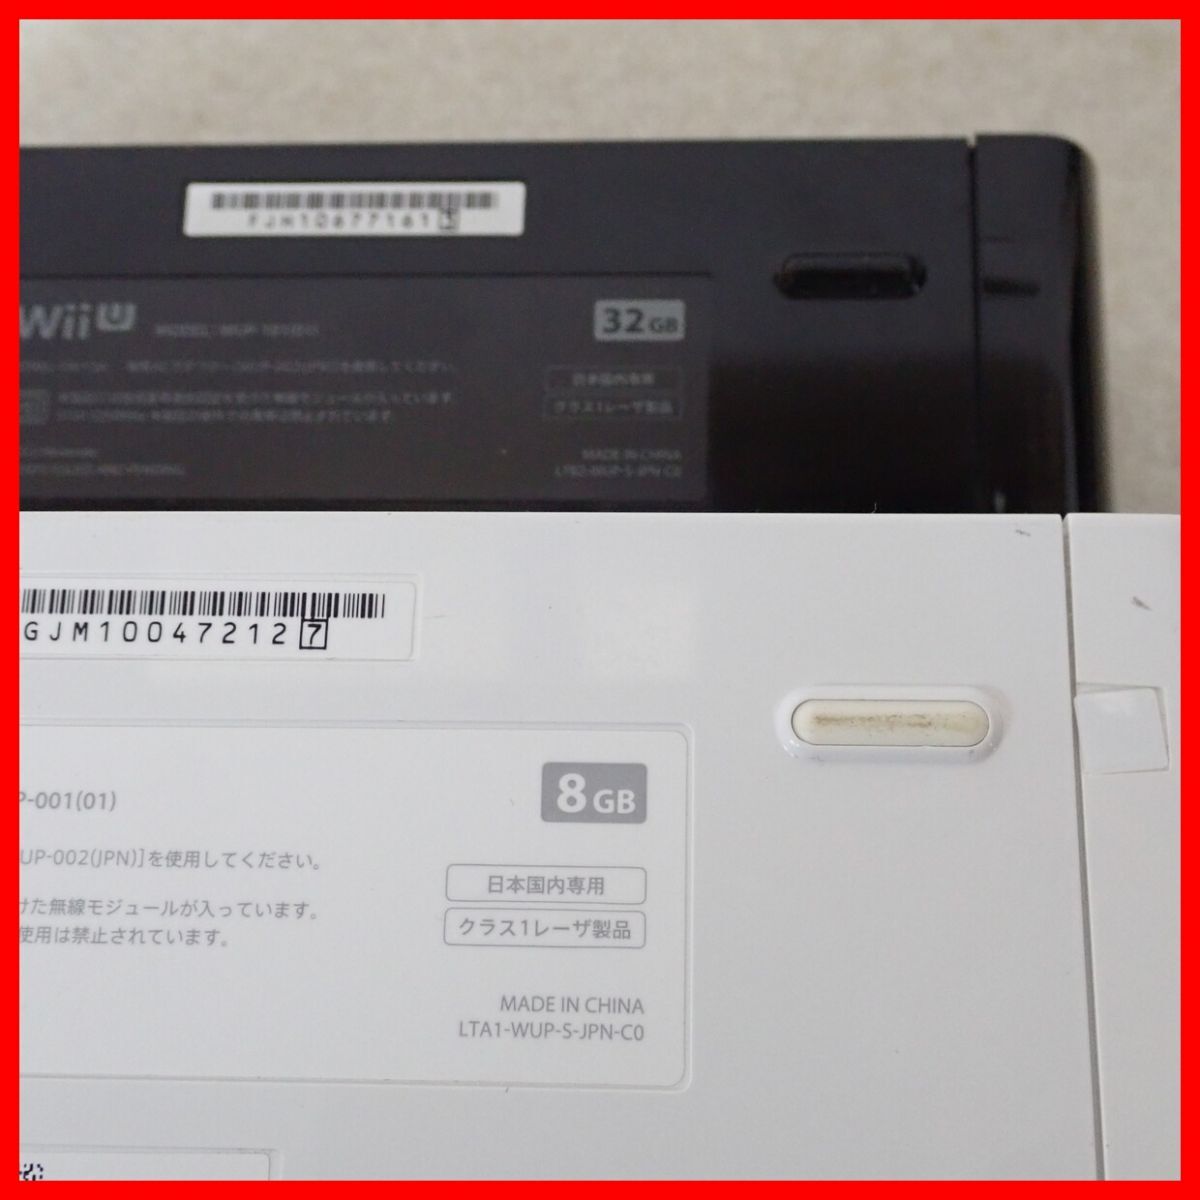  operation goods WiiU 32GB/8GB body 4 pcs white / black + white game pad 1 piece together set Nintendo nintendo [20